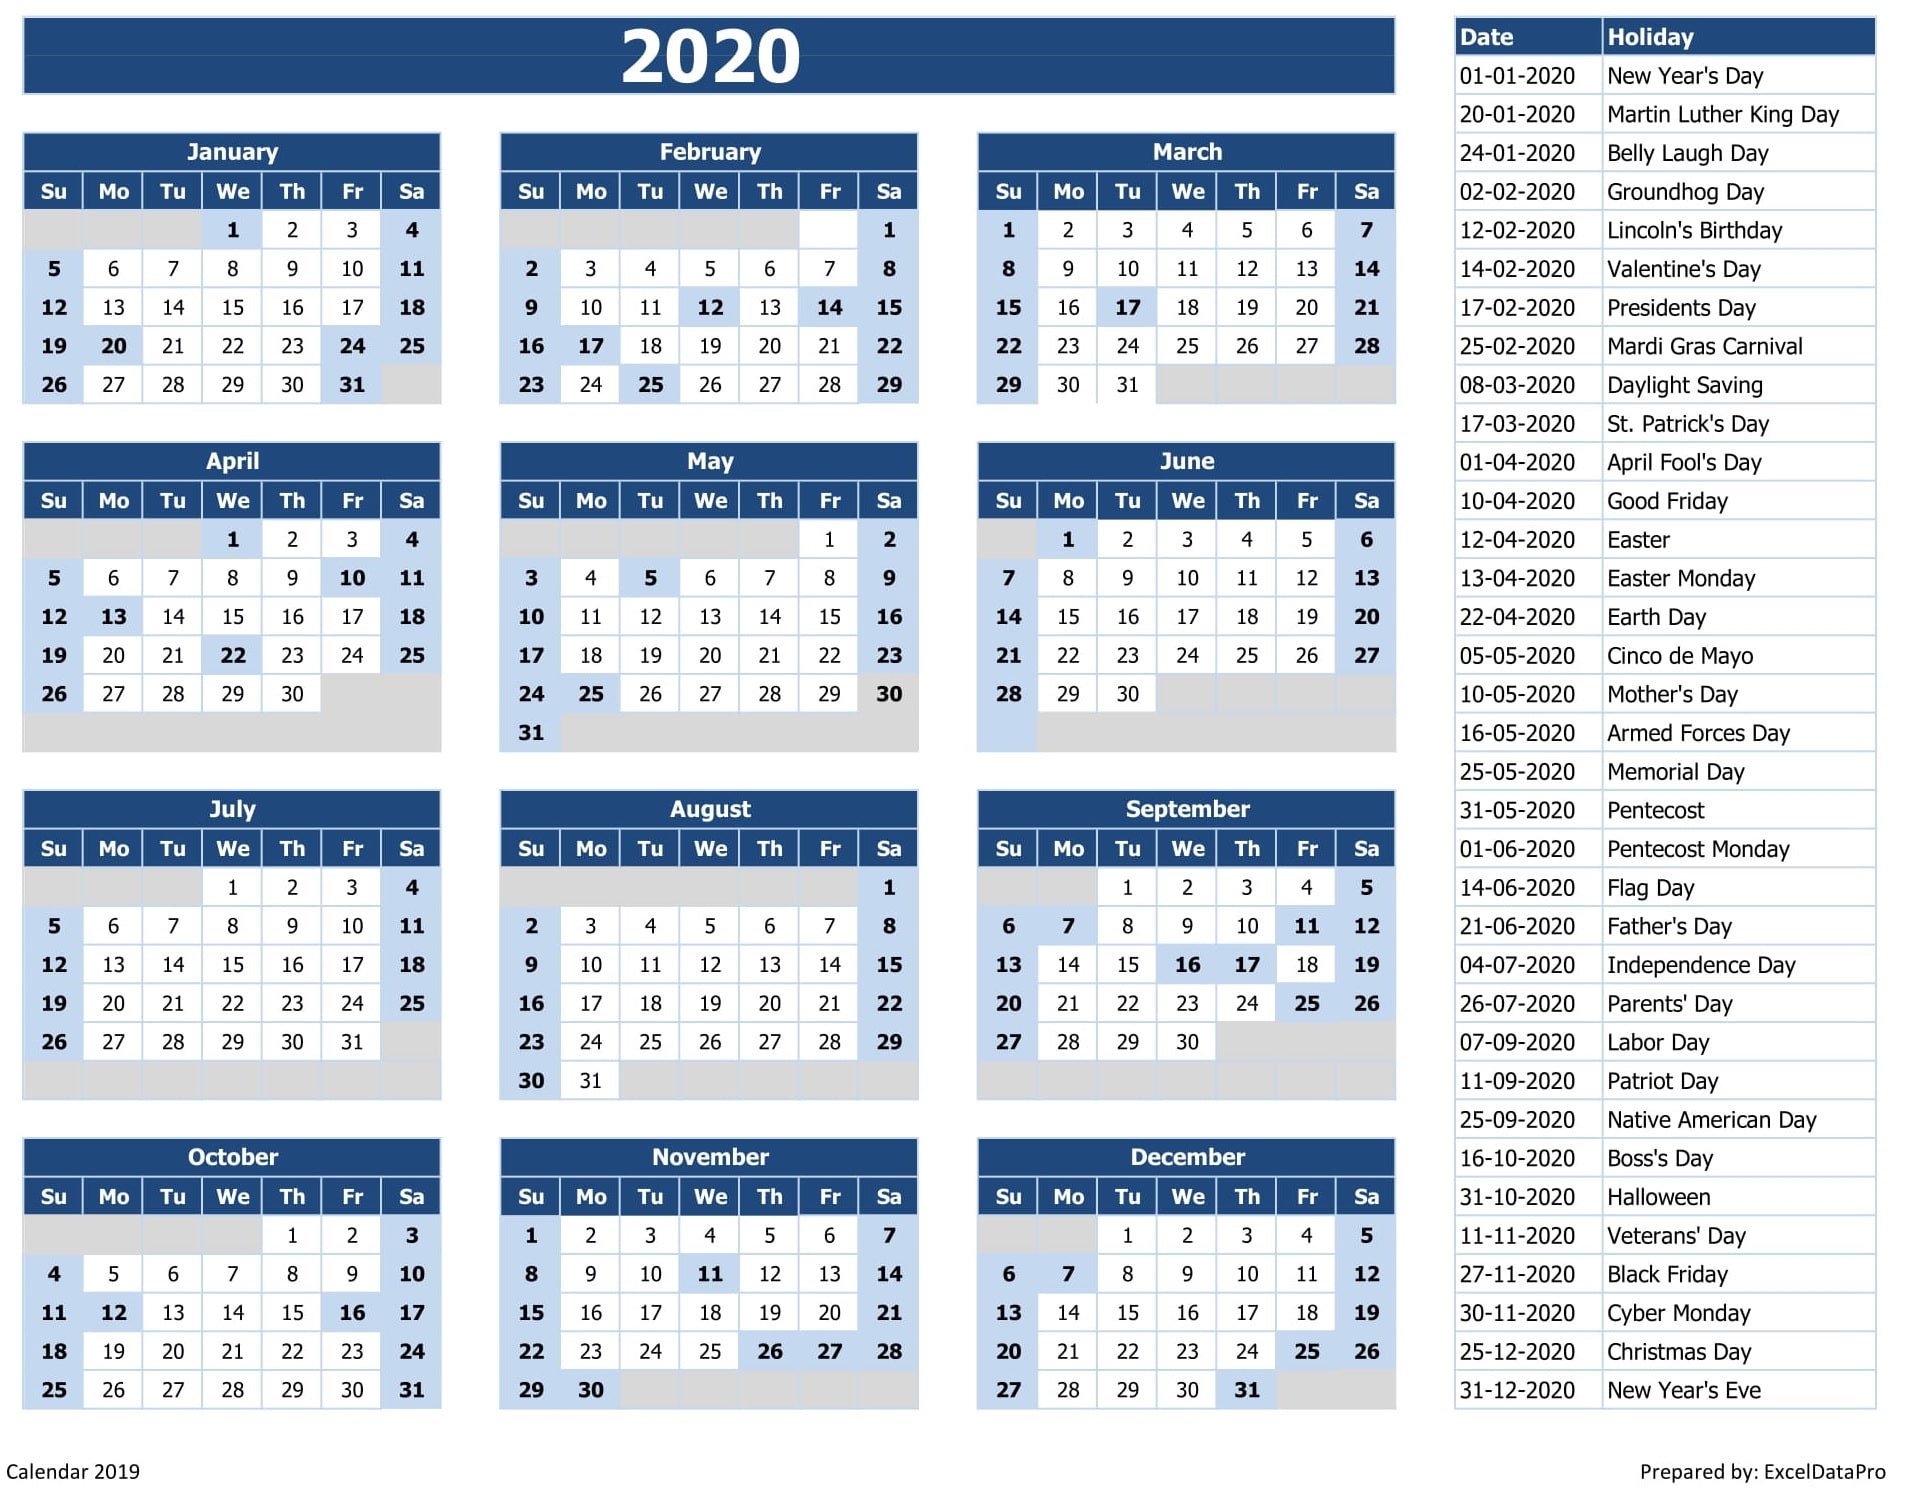 2020 Yearly Calendar